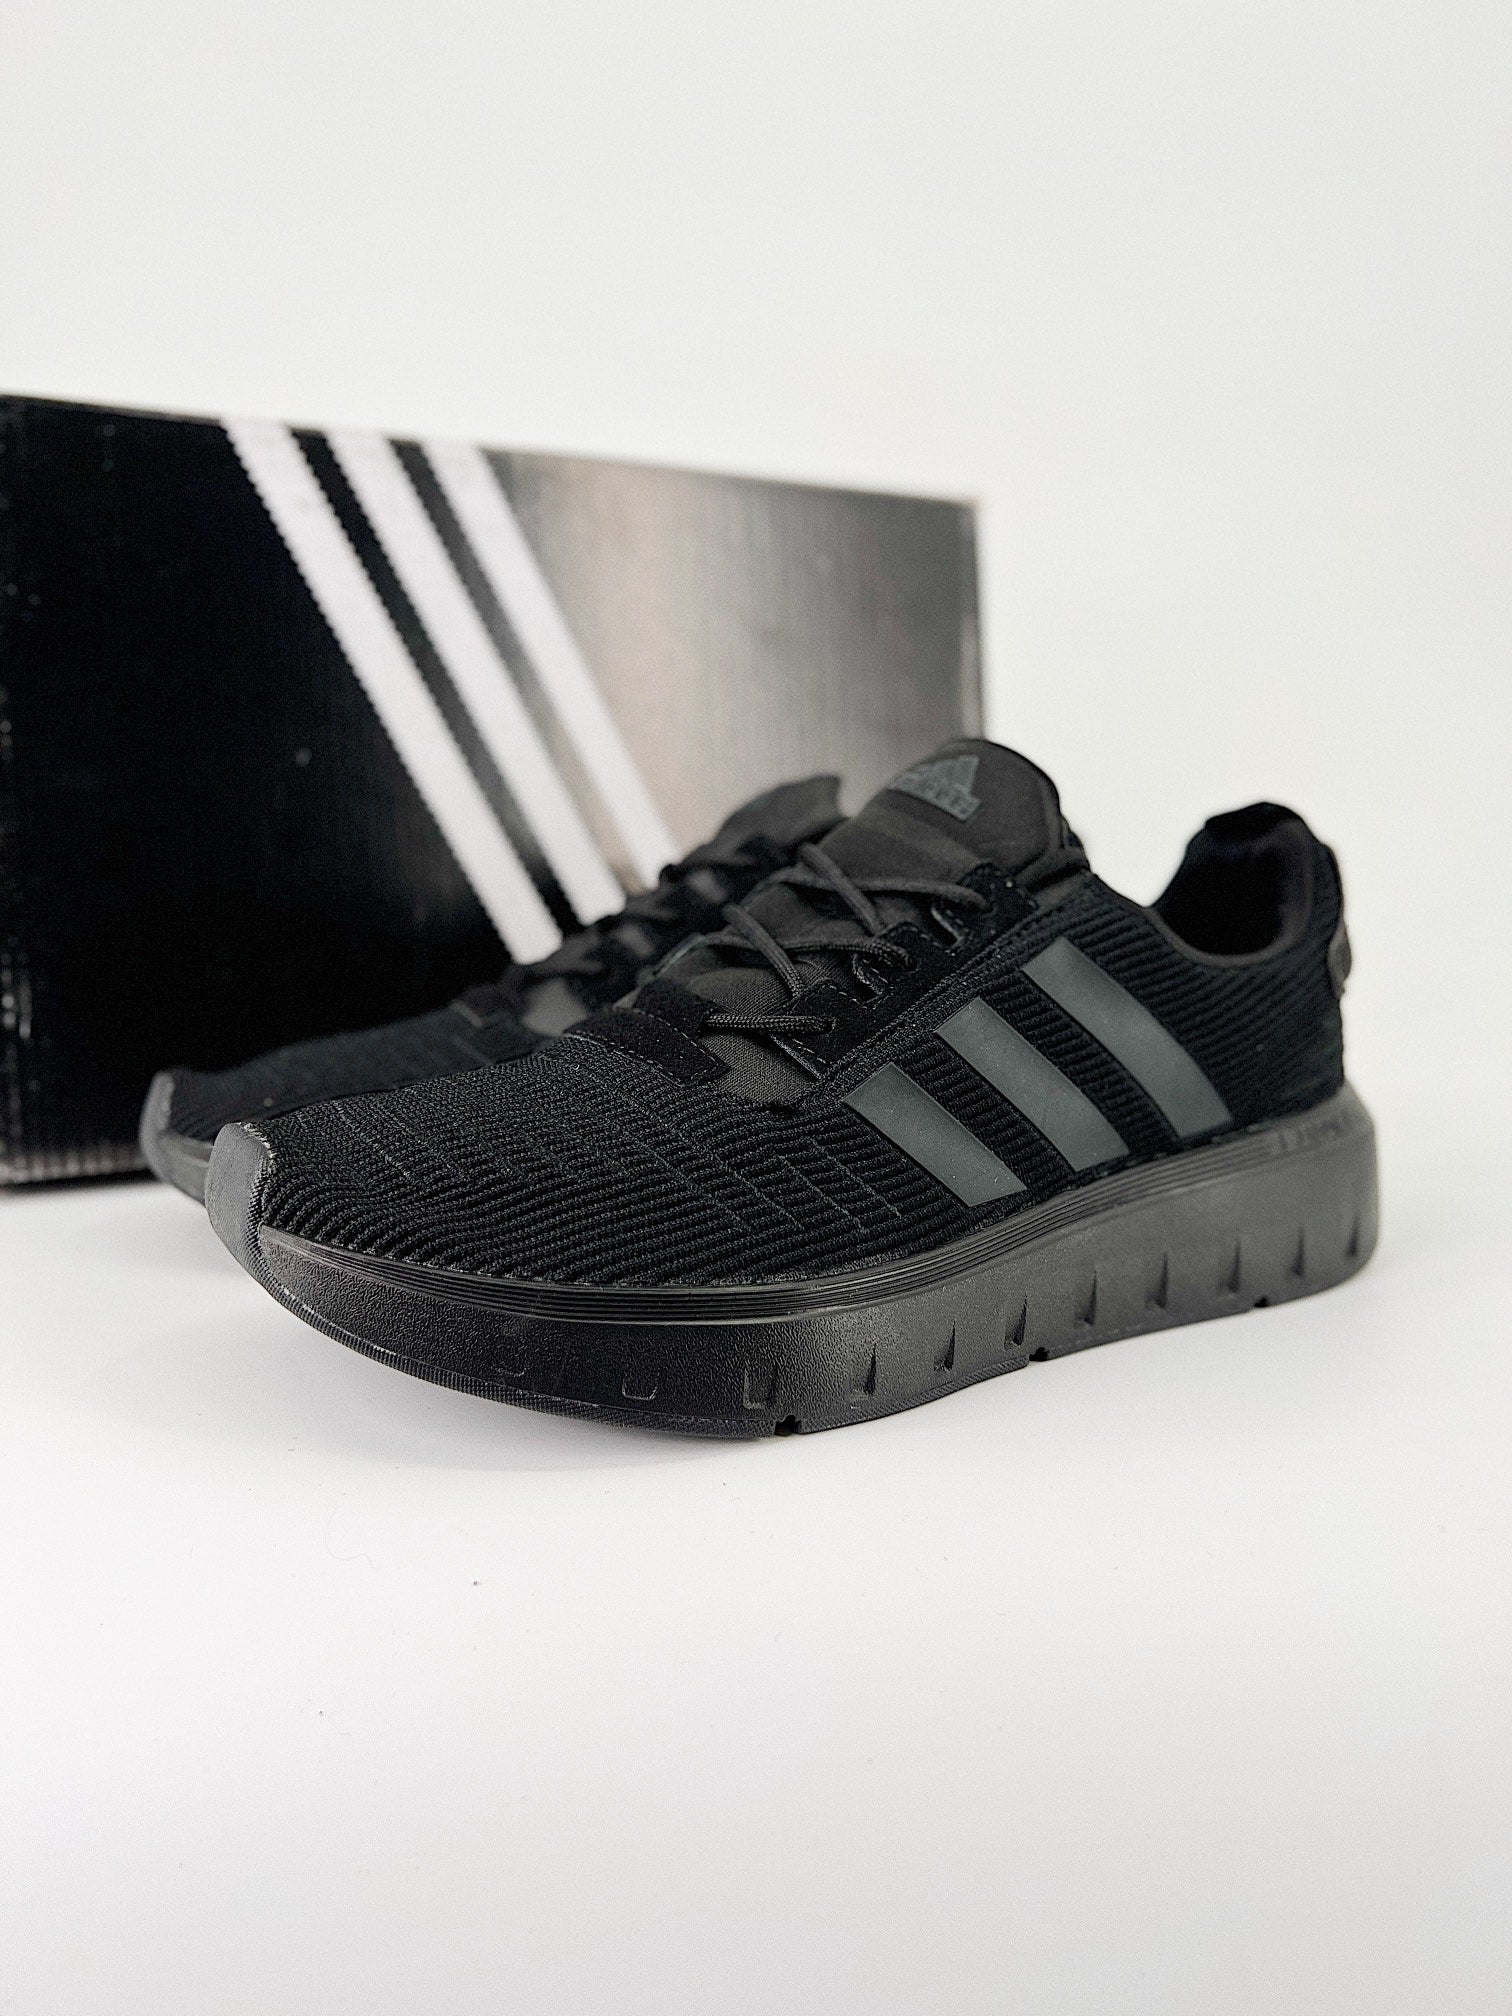 Adidas RUN swift full black